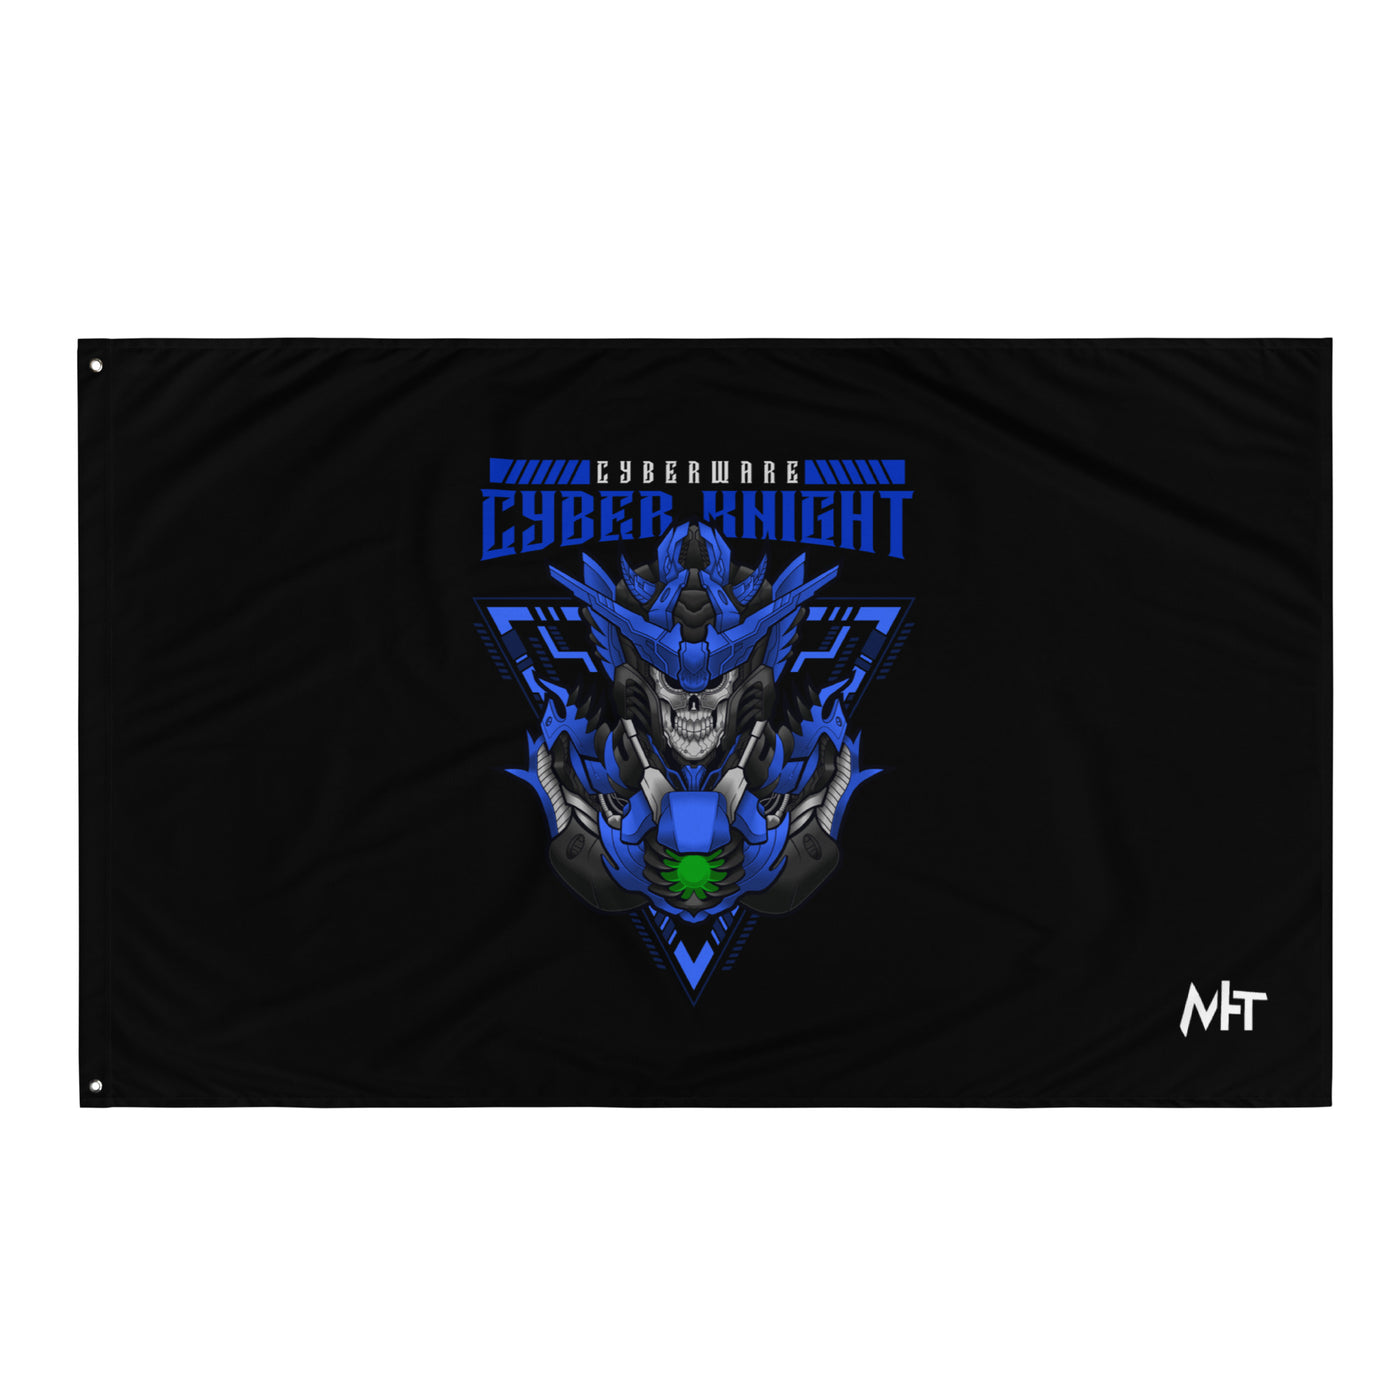 CyberWare Cyber knight - Flag